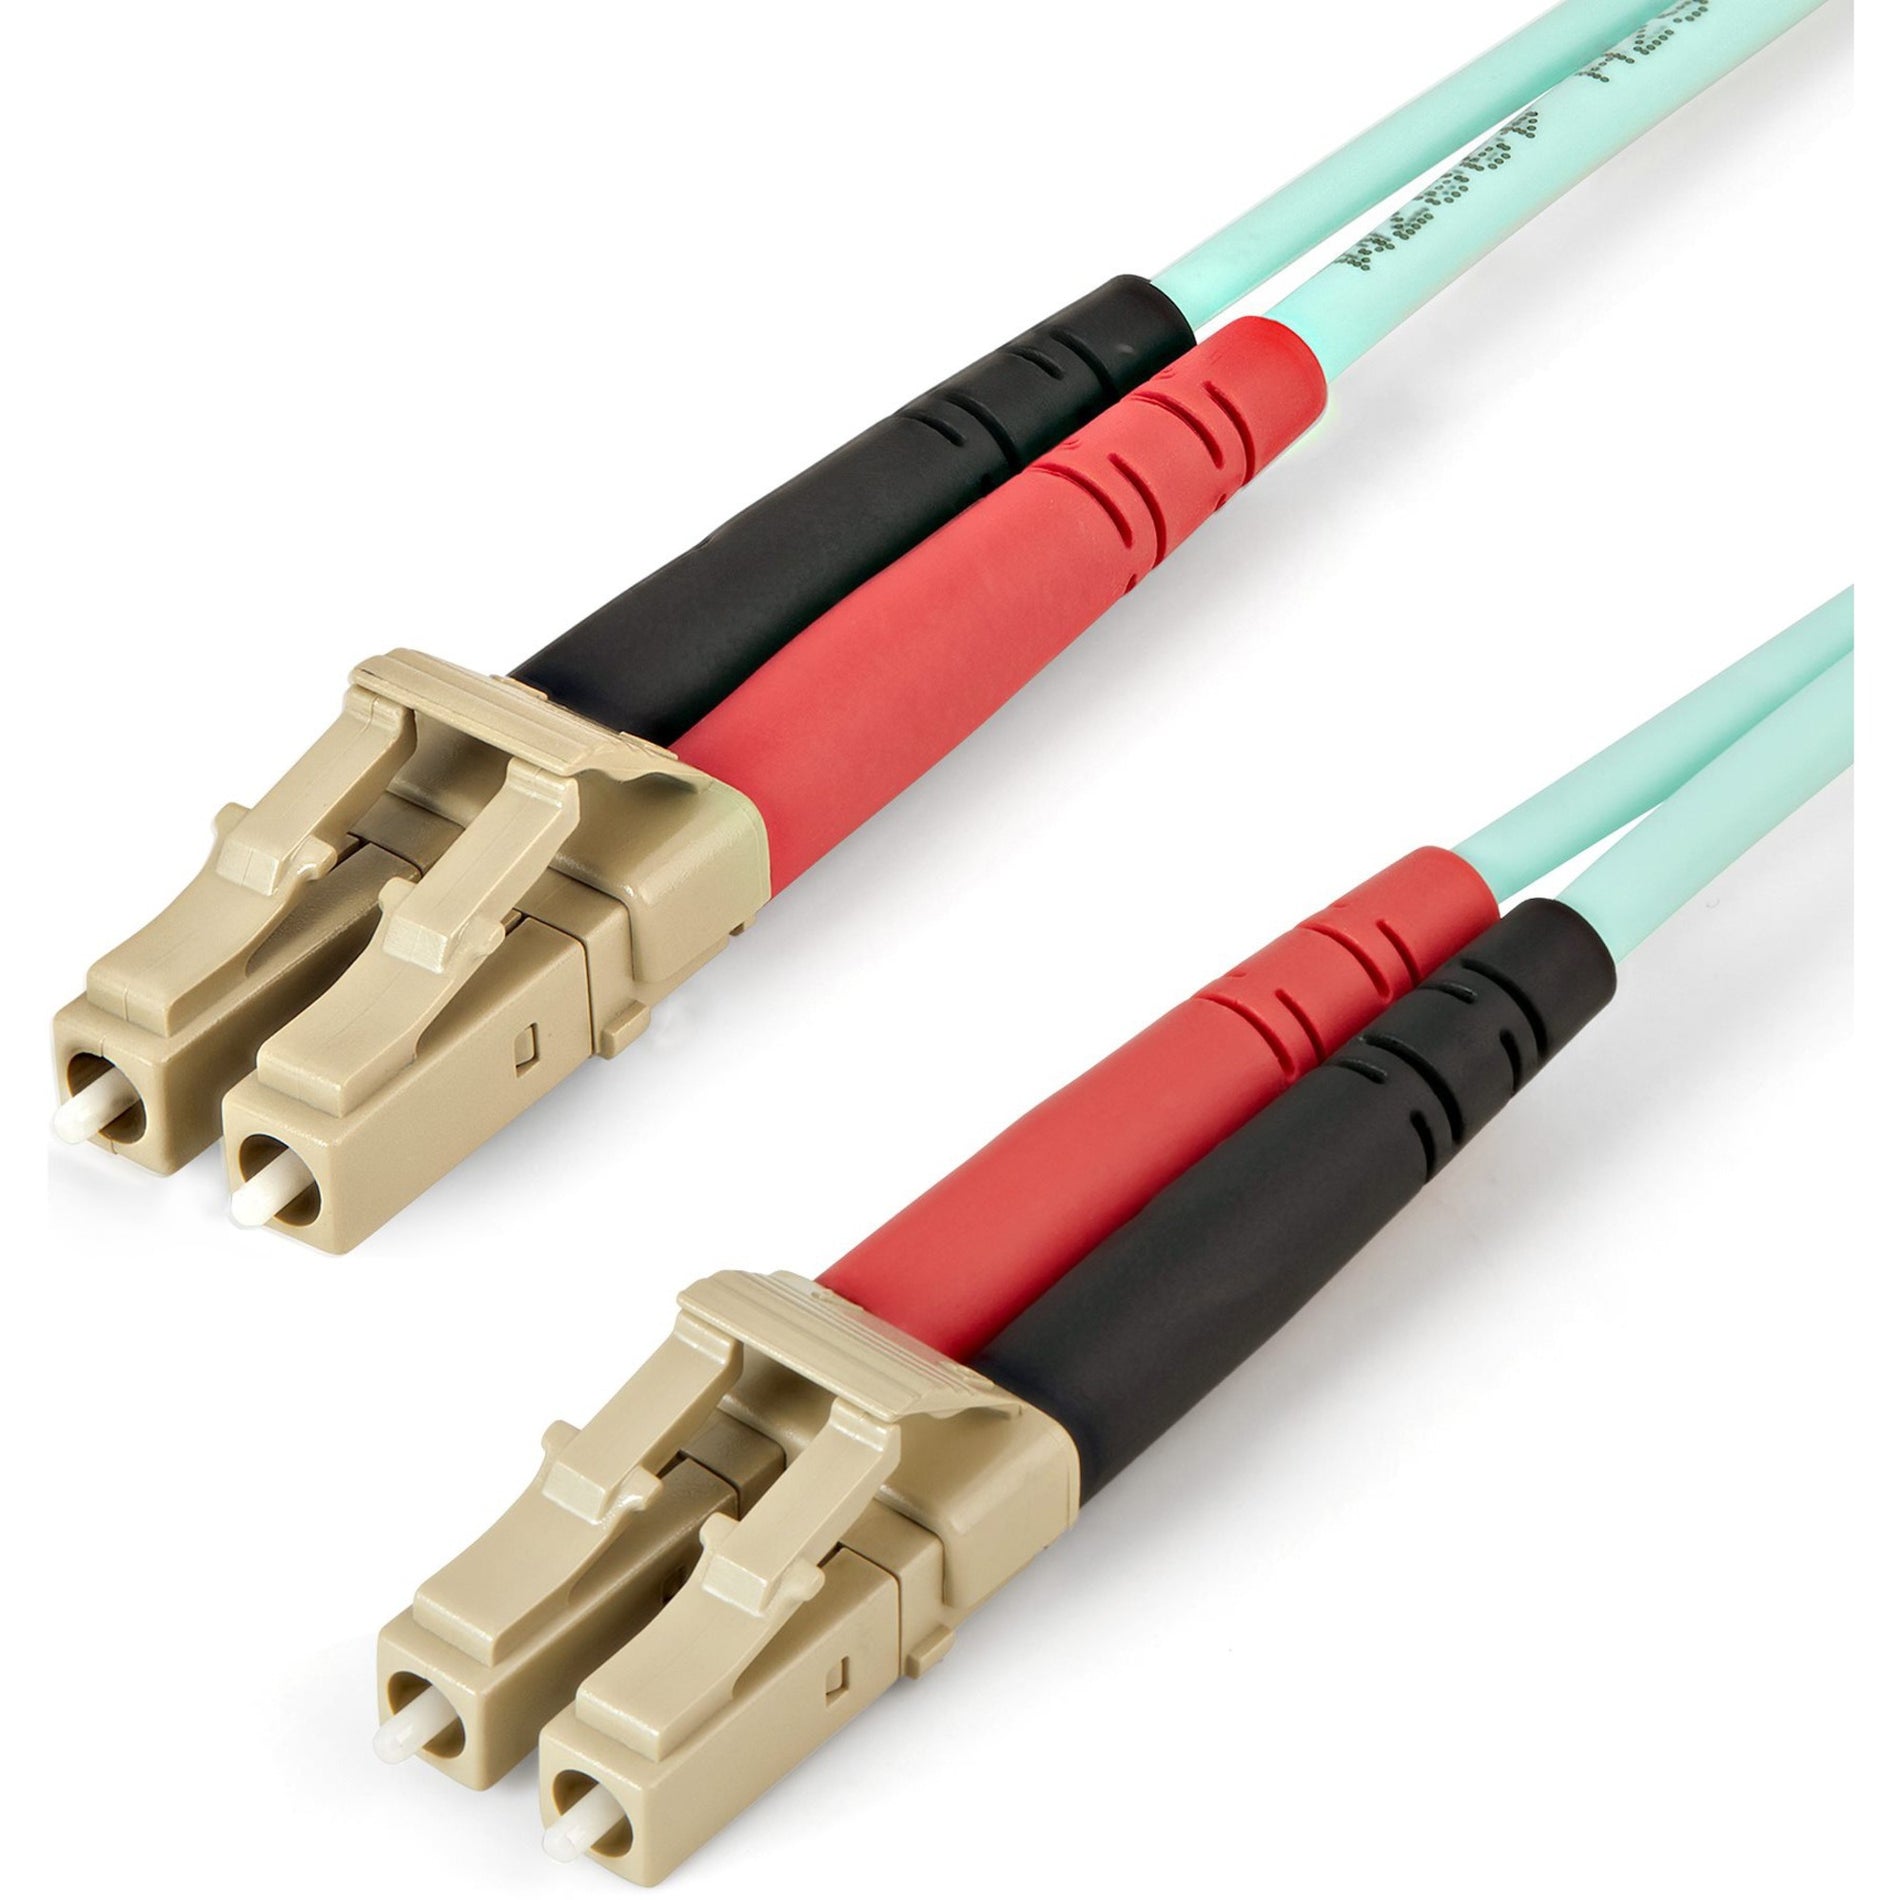 StarTech.com 450FBLCLC2 Fiber Optic Duplex Patch Network Cable, 6 ft, 100 Gb, 50/125, OM4 Fiber, LC to LC Fiber Patch Cable